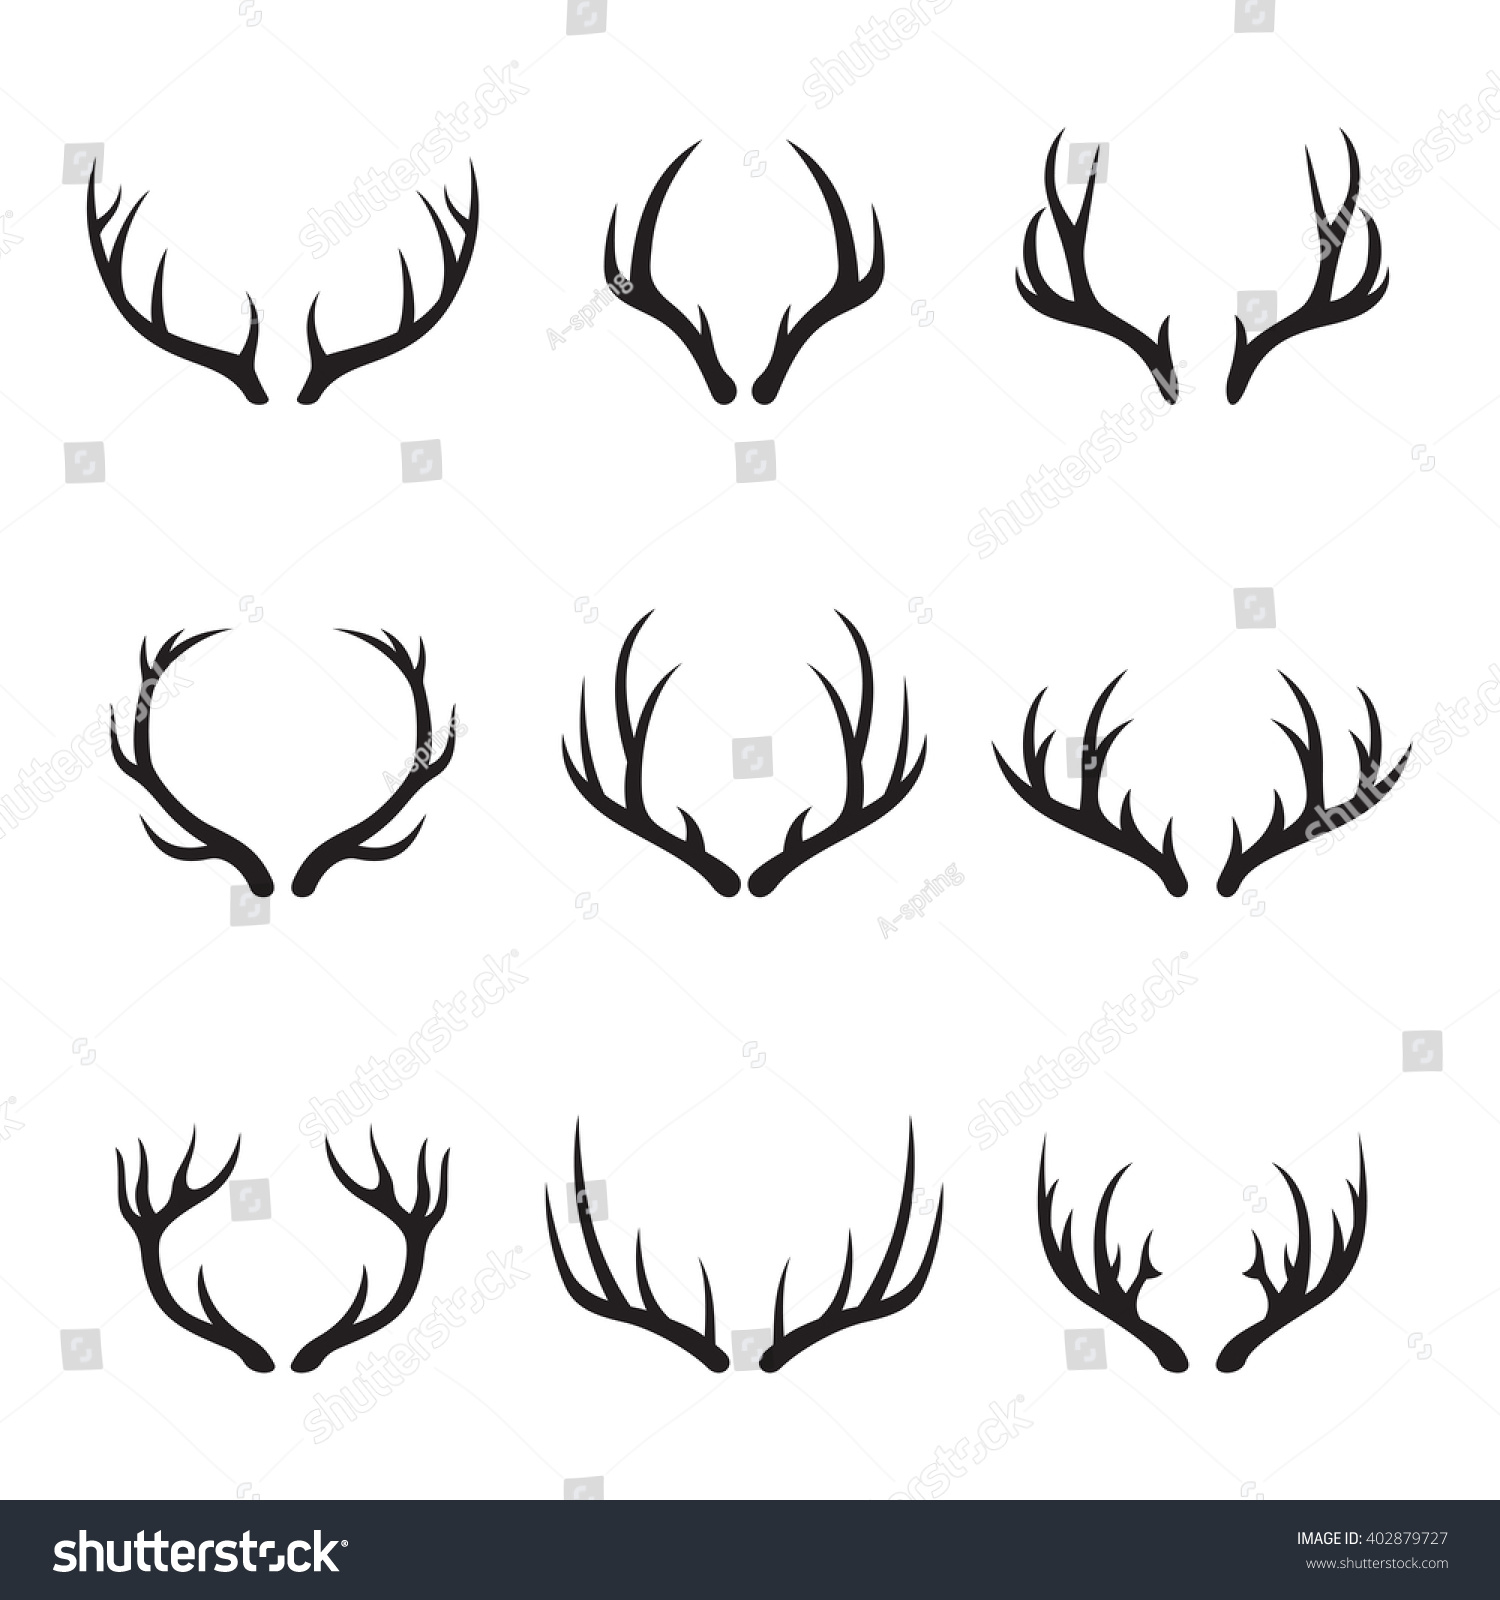 Horns Icons Stock Vector Illustration 402879727 : Shutterstock